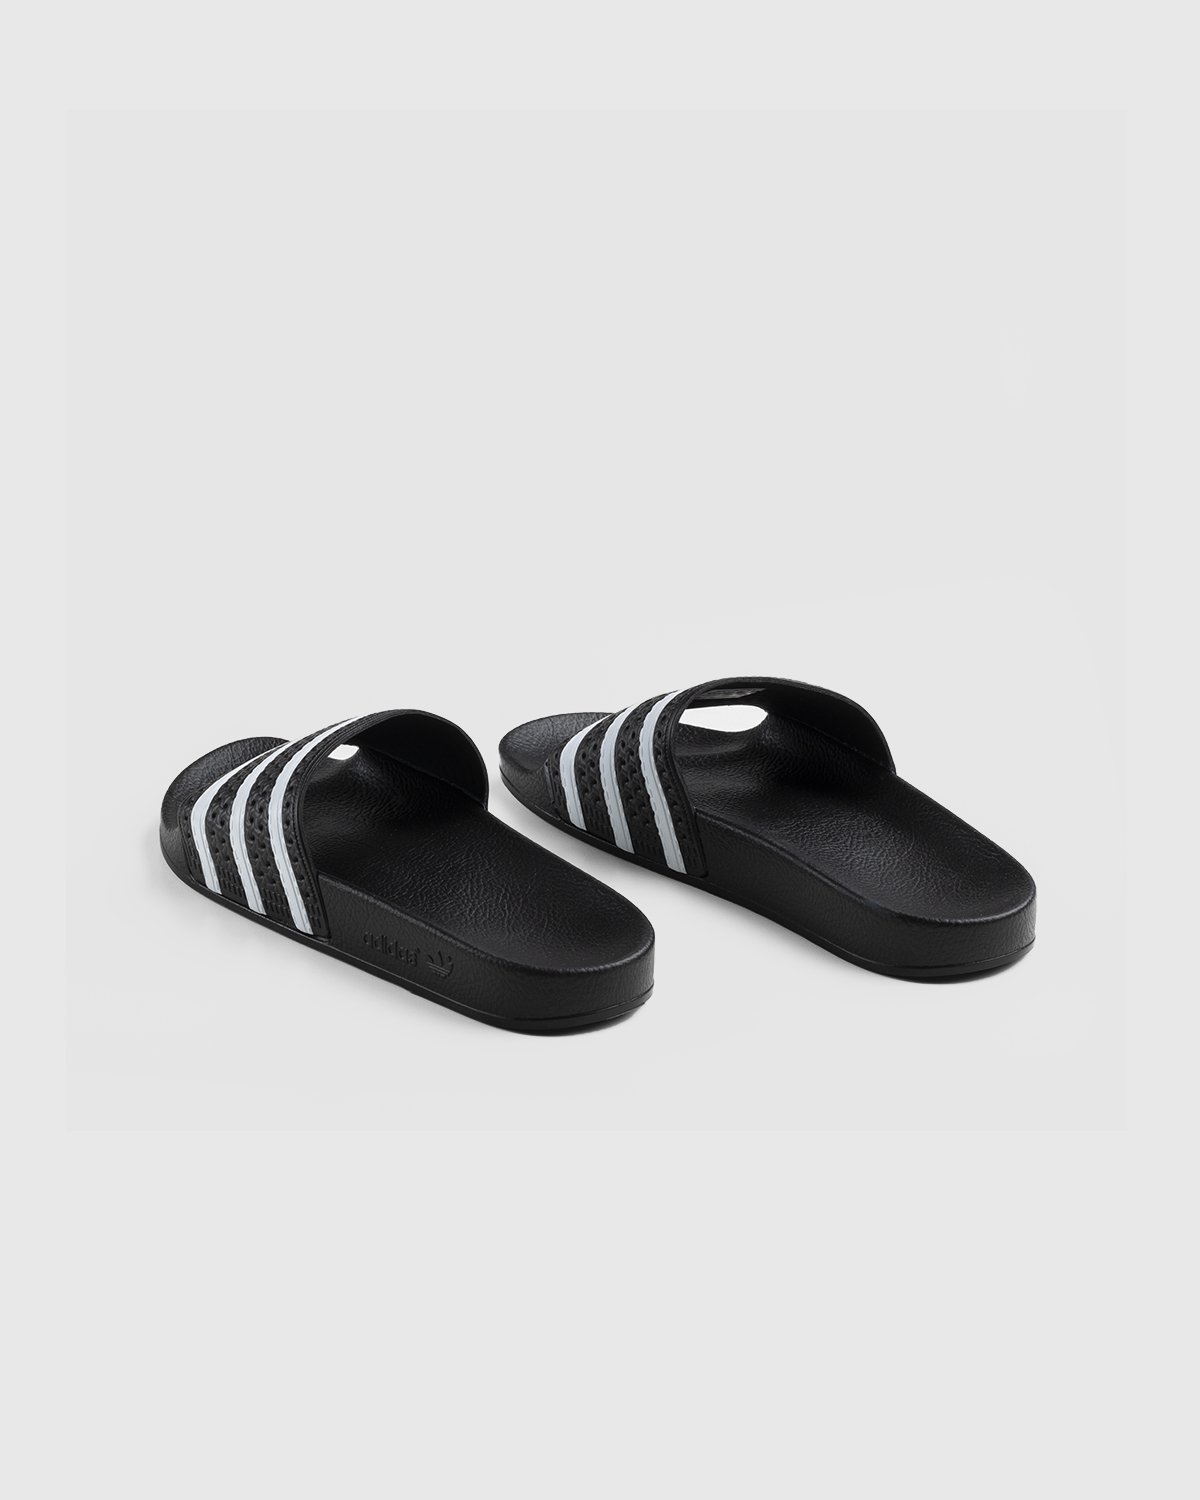 Adidas - Adilette Core Black White Core Black - Footwear - Black - Image 4